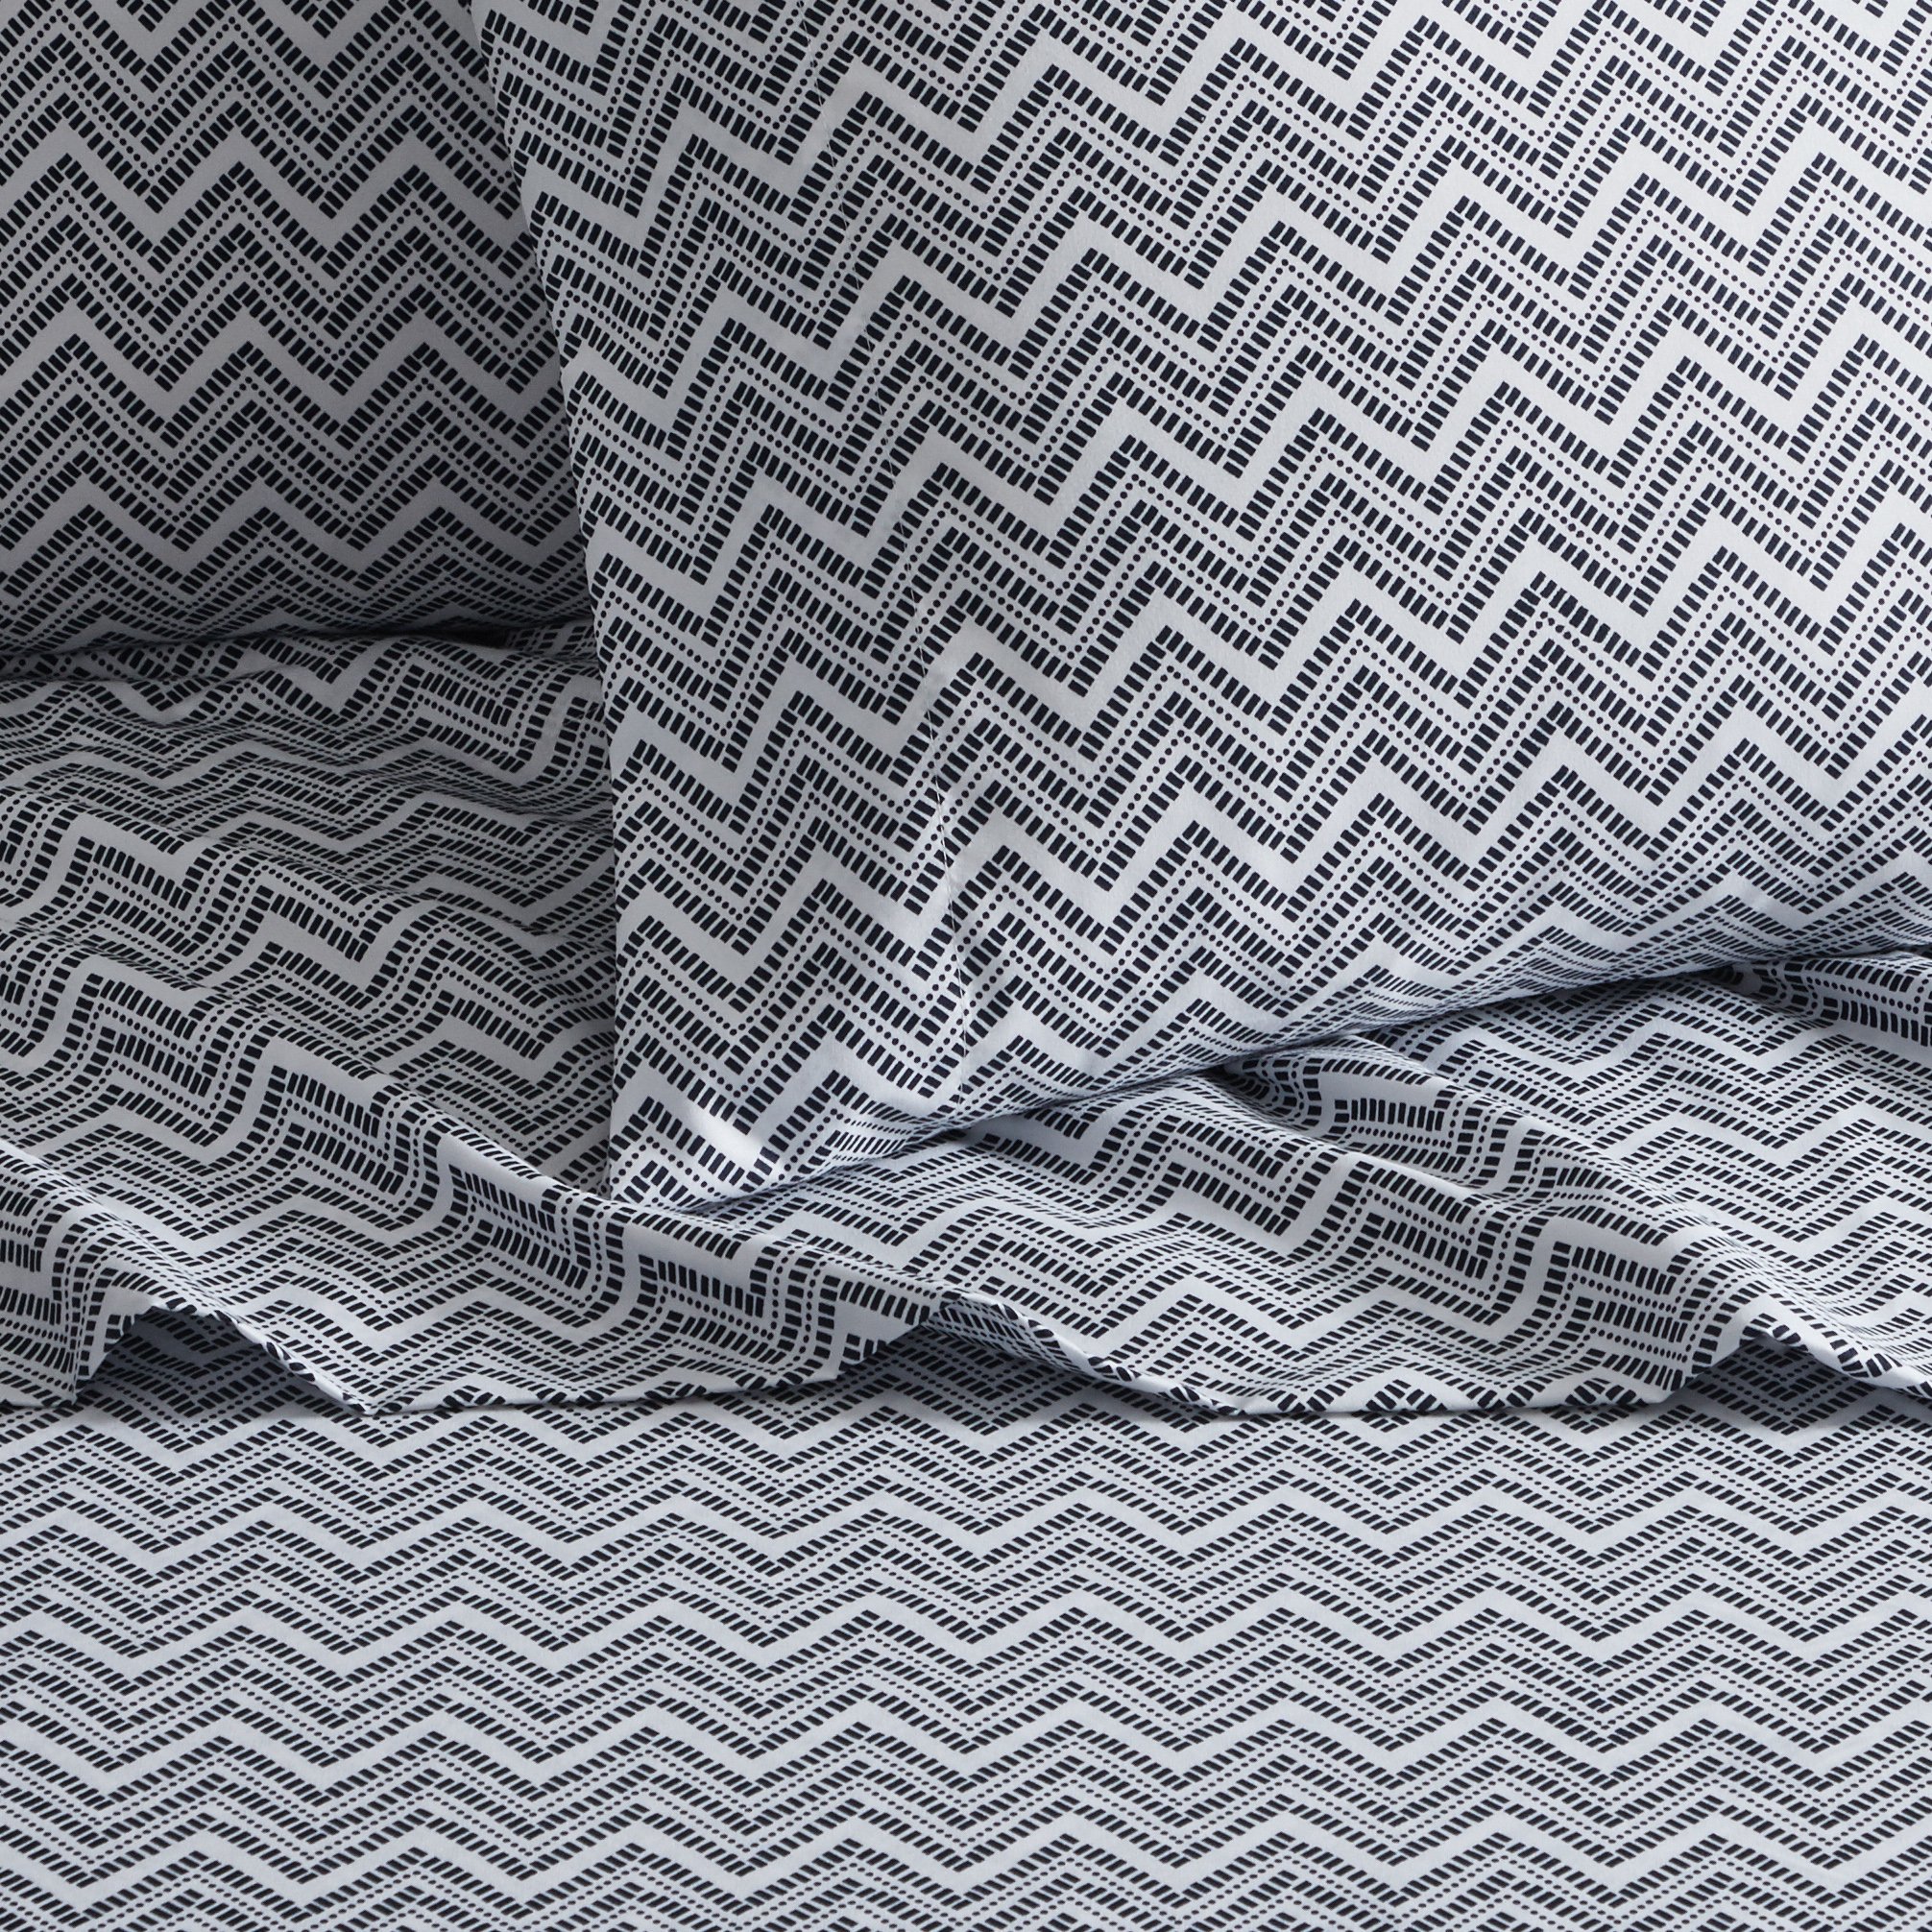 Alaina 3 Or 4 Piece Sheet Set Super Soft Contemporary Striped Chevron - Navy, King